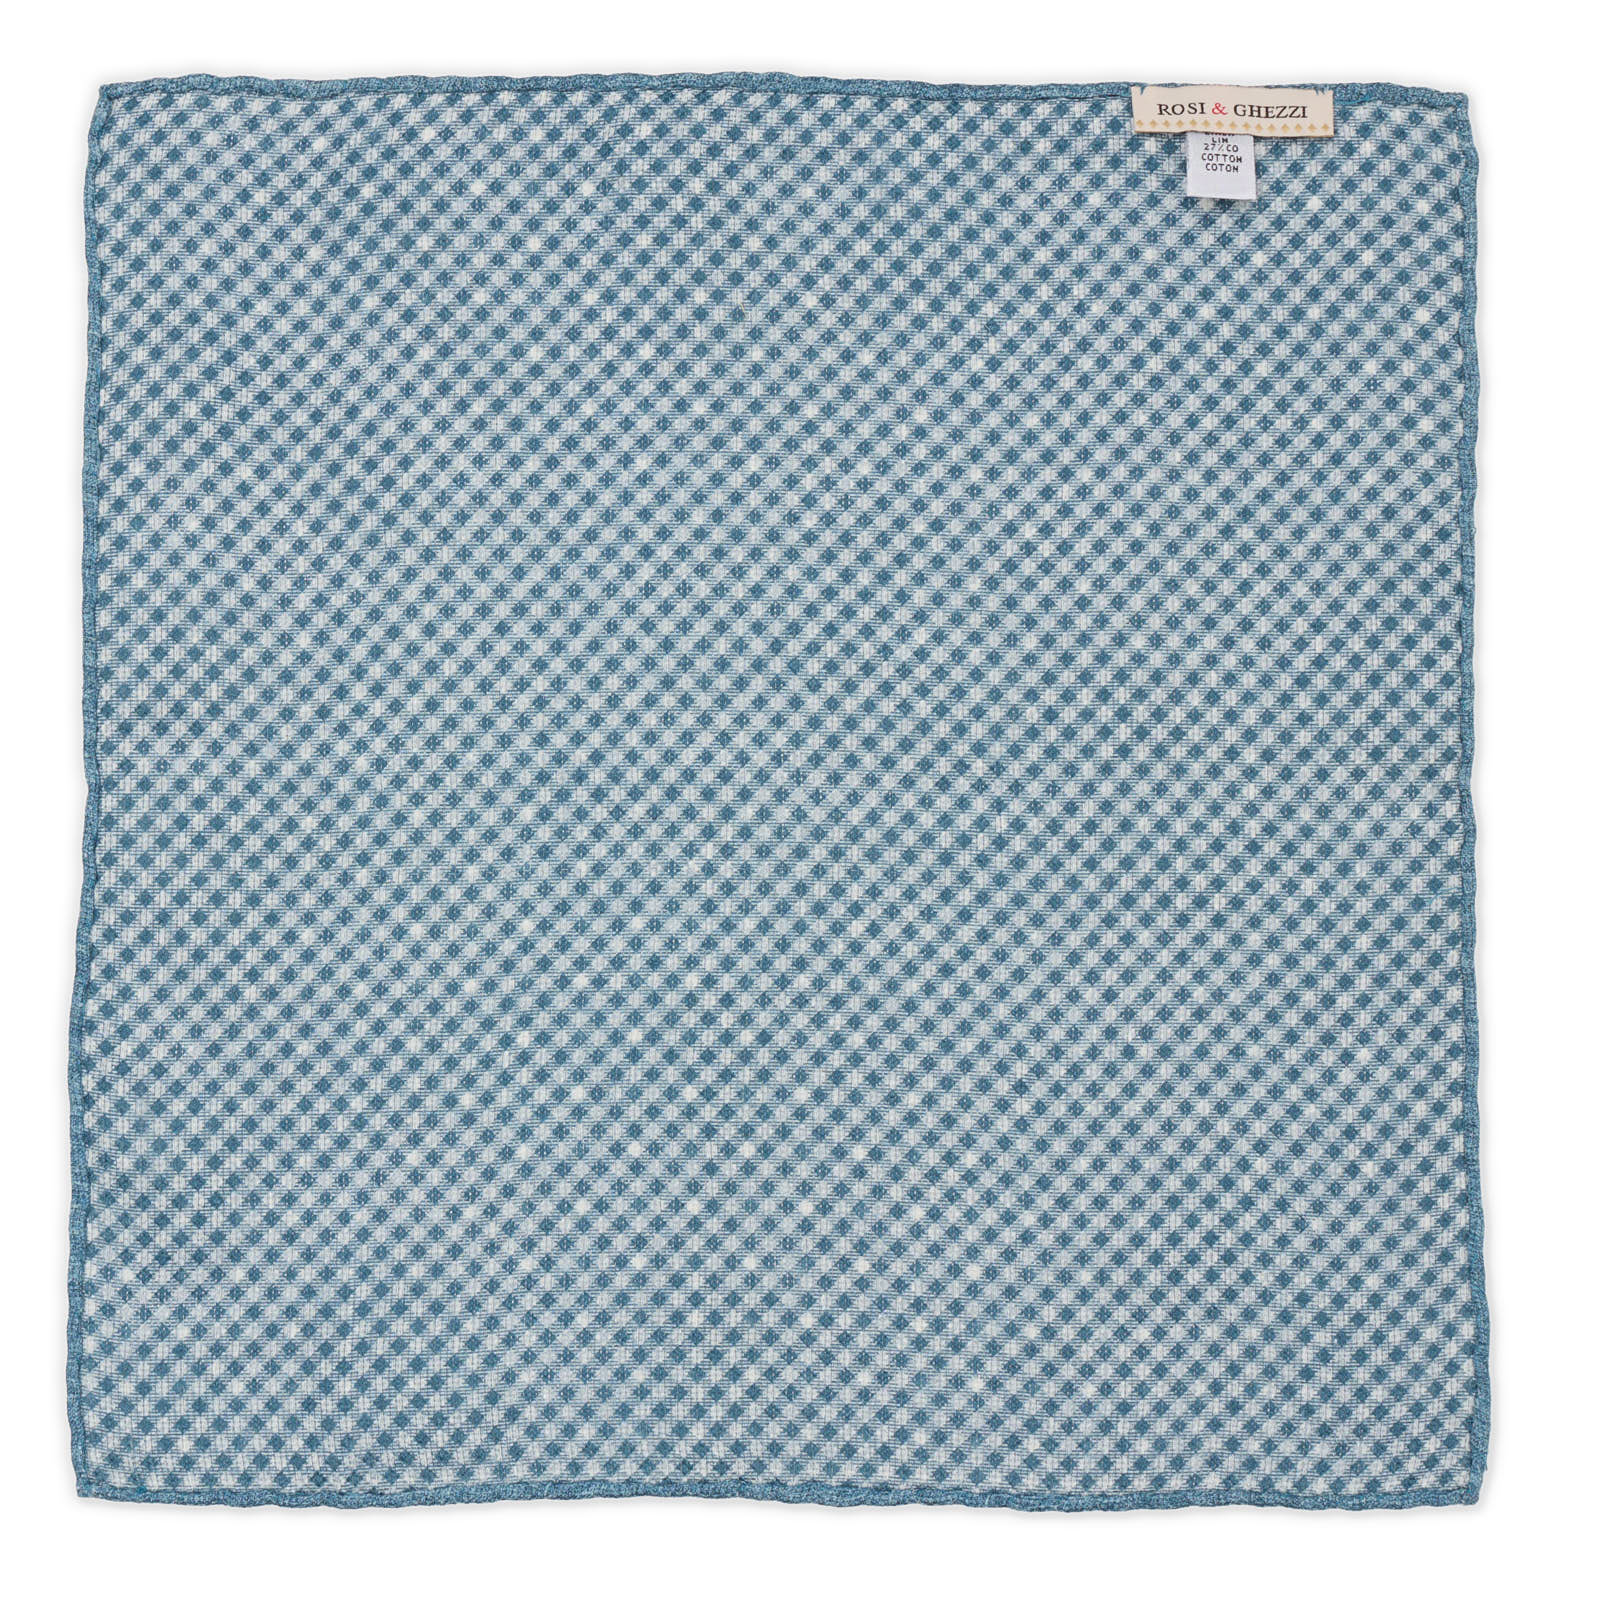 ROSI Handmade Blue Dot-Plaids Linen-Cotton Pocket Square Double Sided